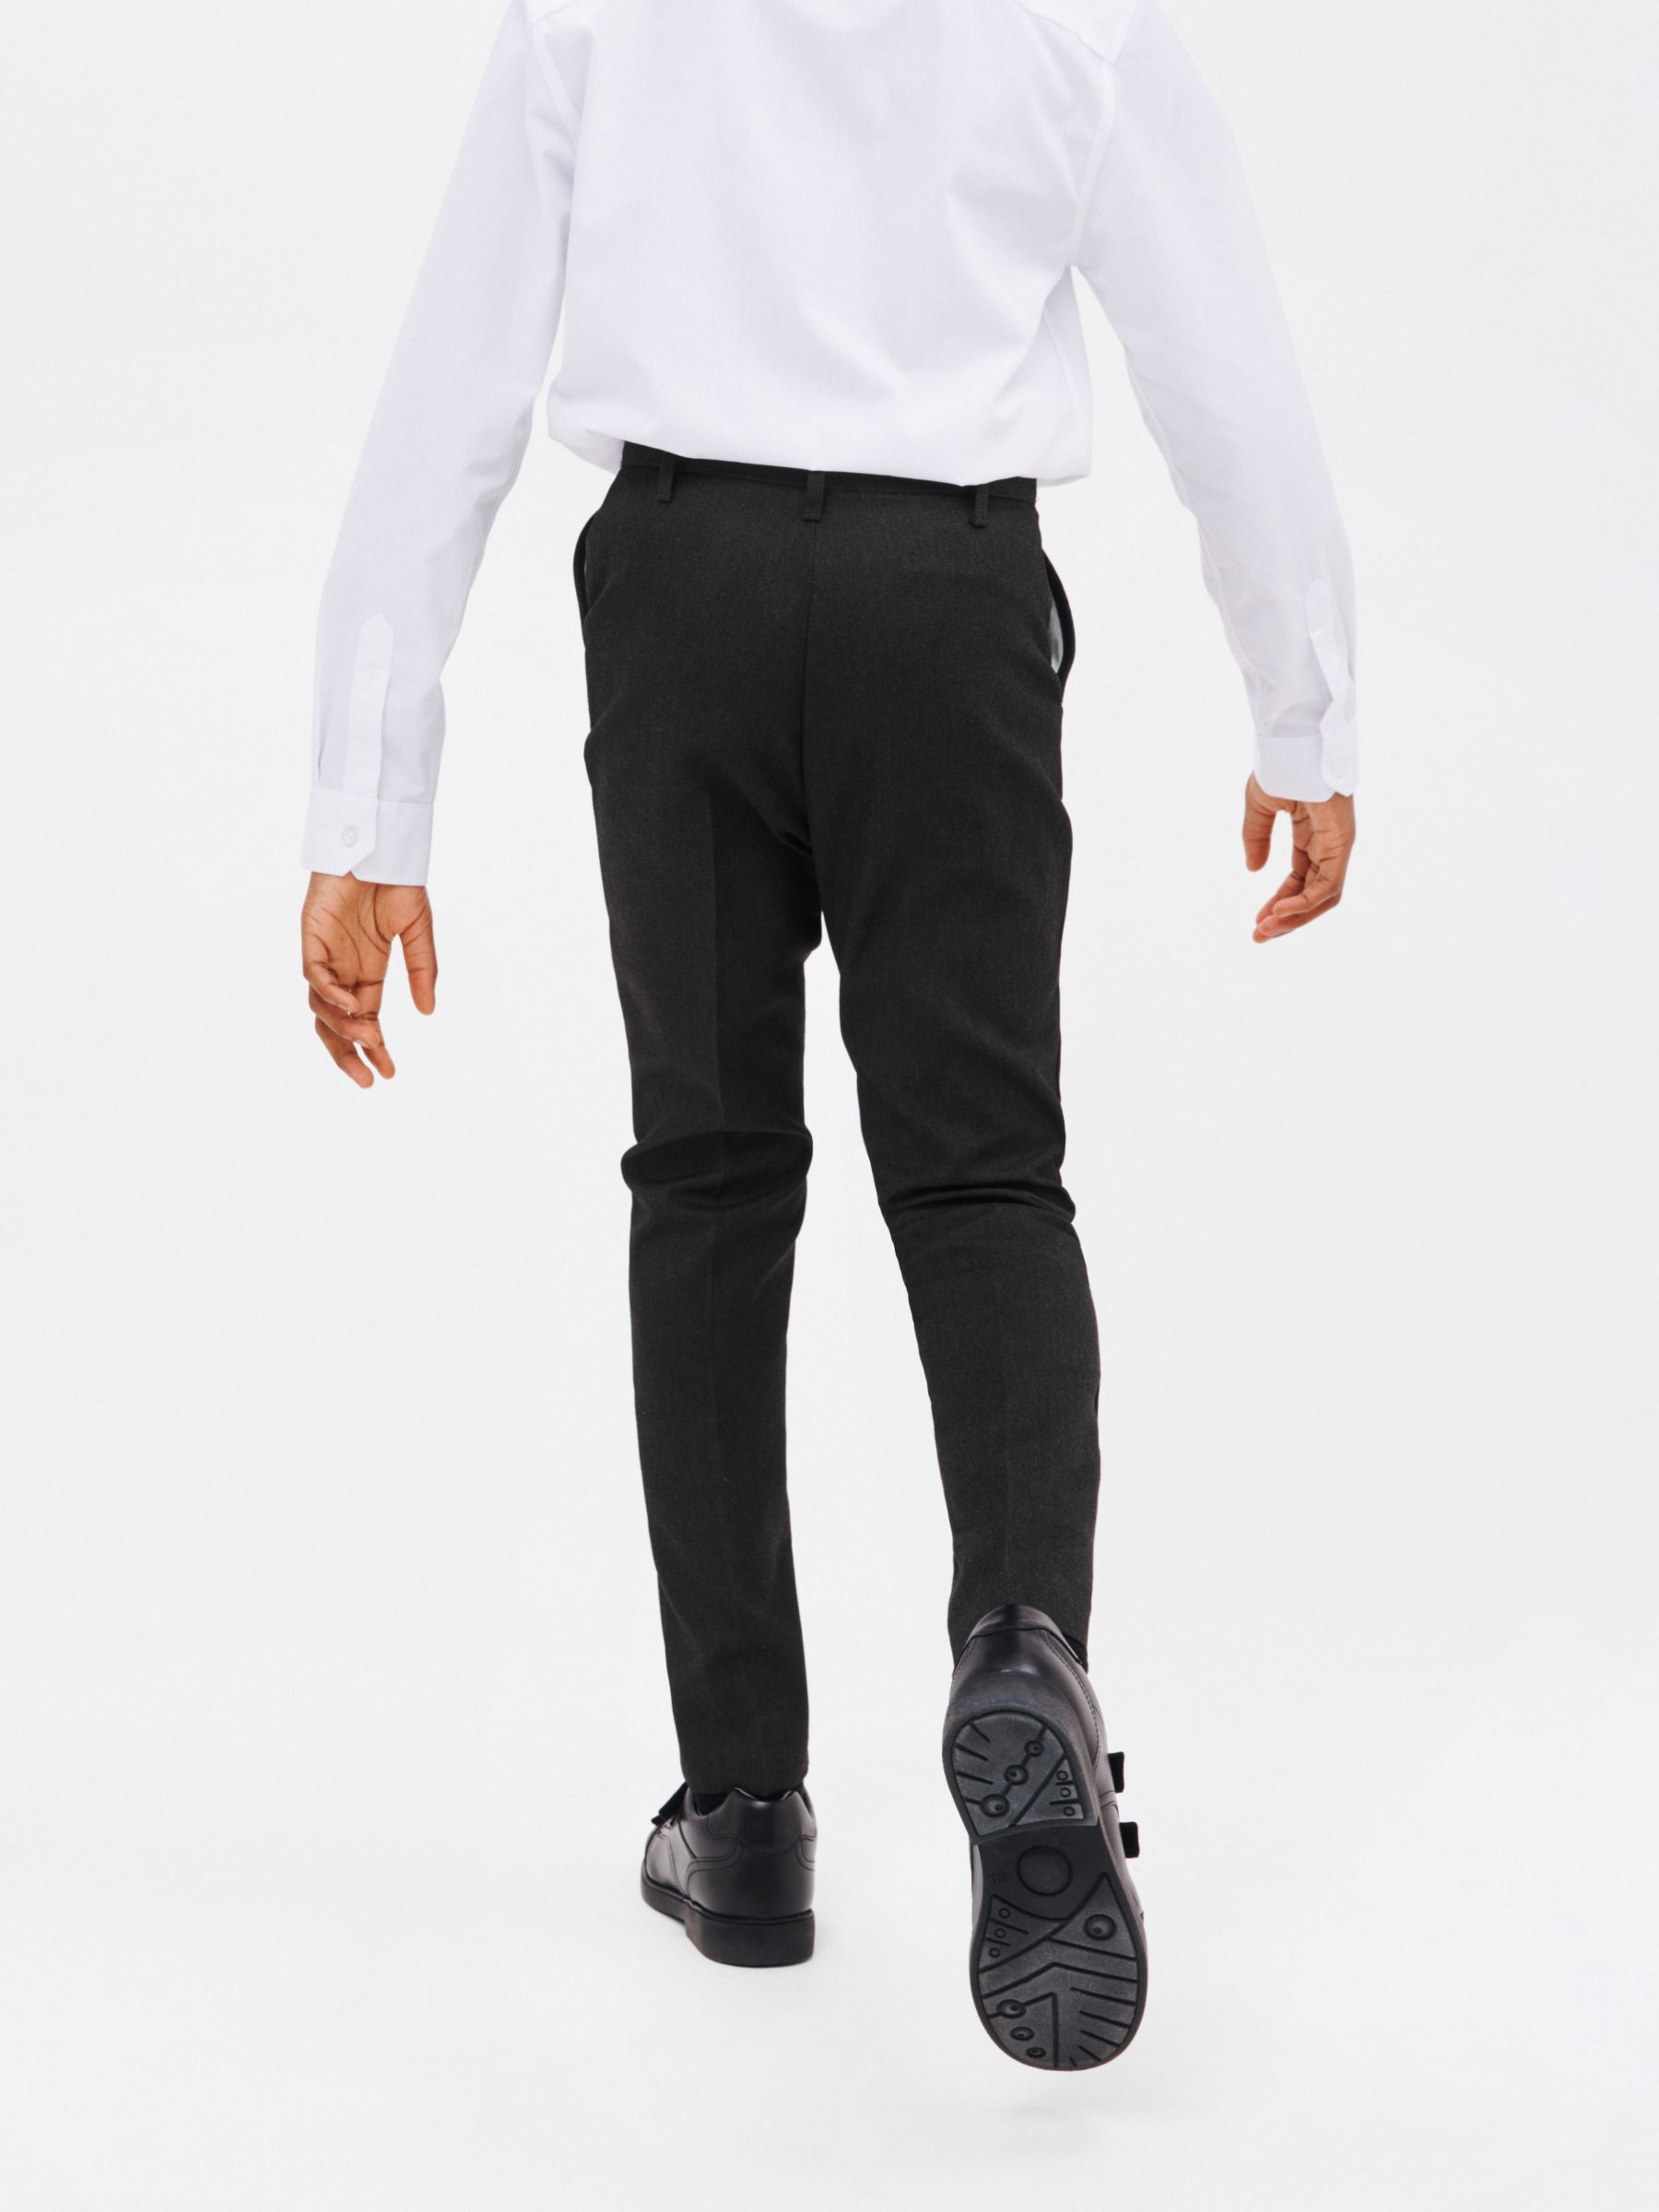 Buy John Lewis Boys' Regular Length Skinny School Trousers Online at johnlewis.com